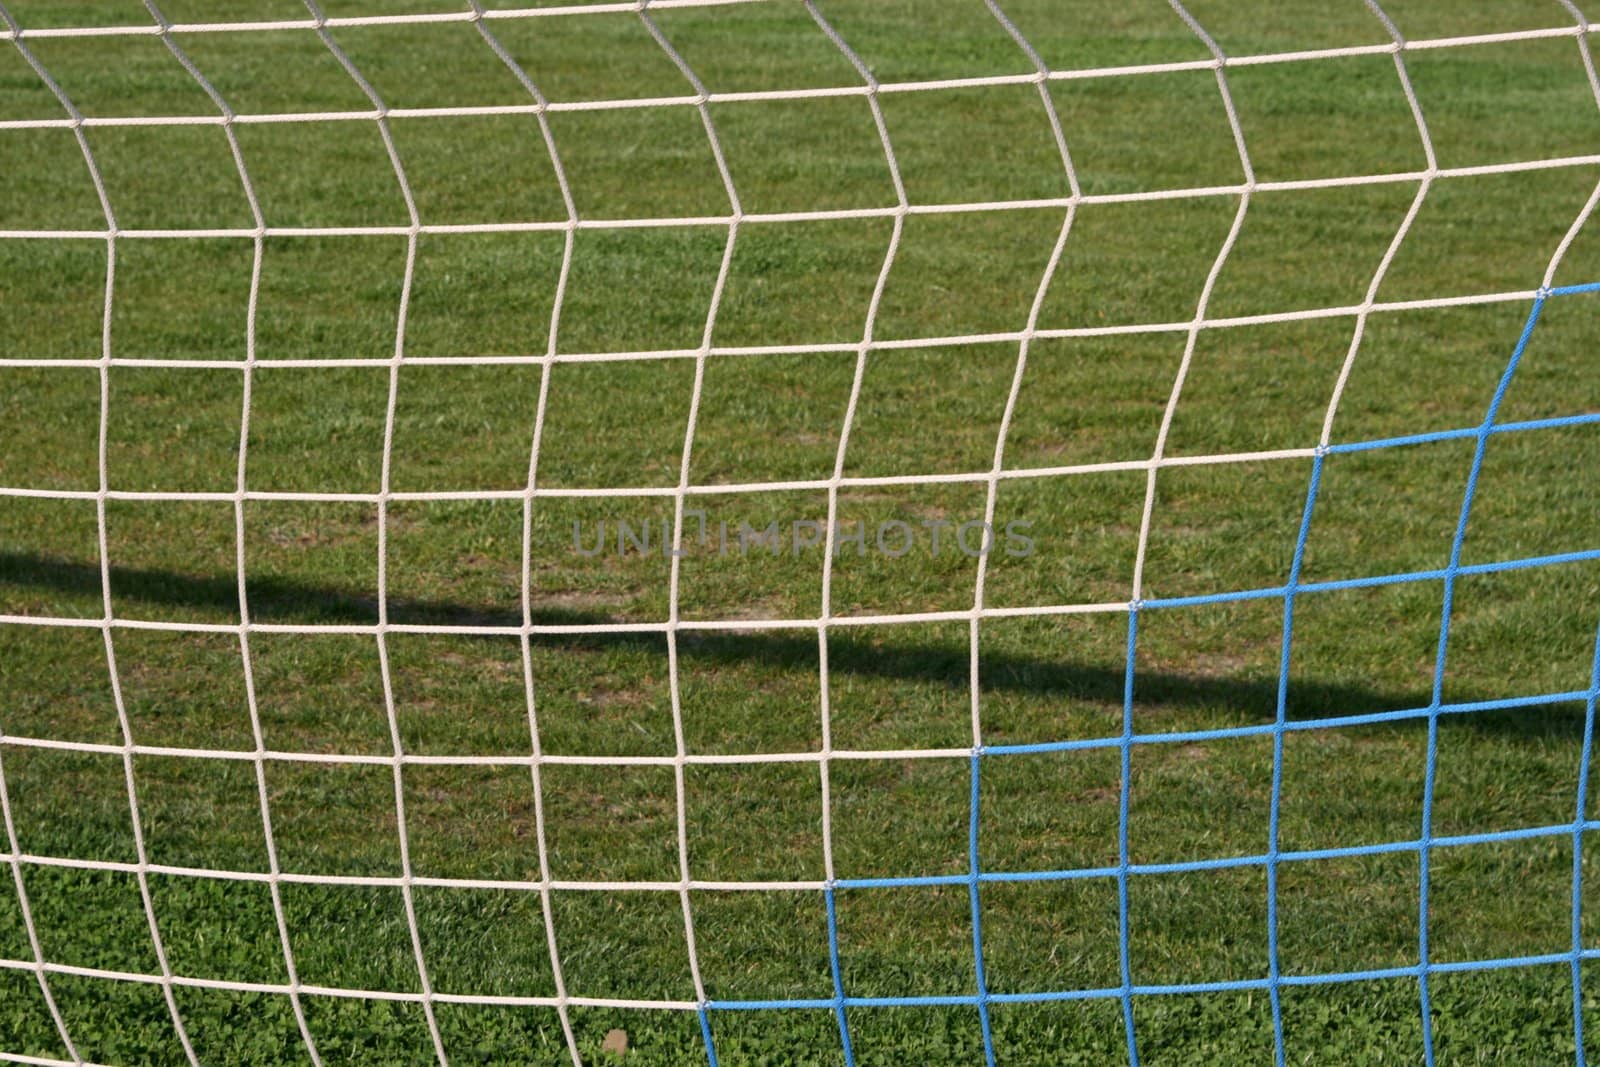 goalpost net detail with green grass  background sports concepts